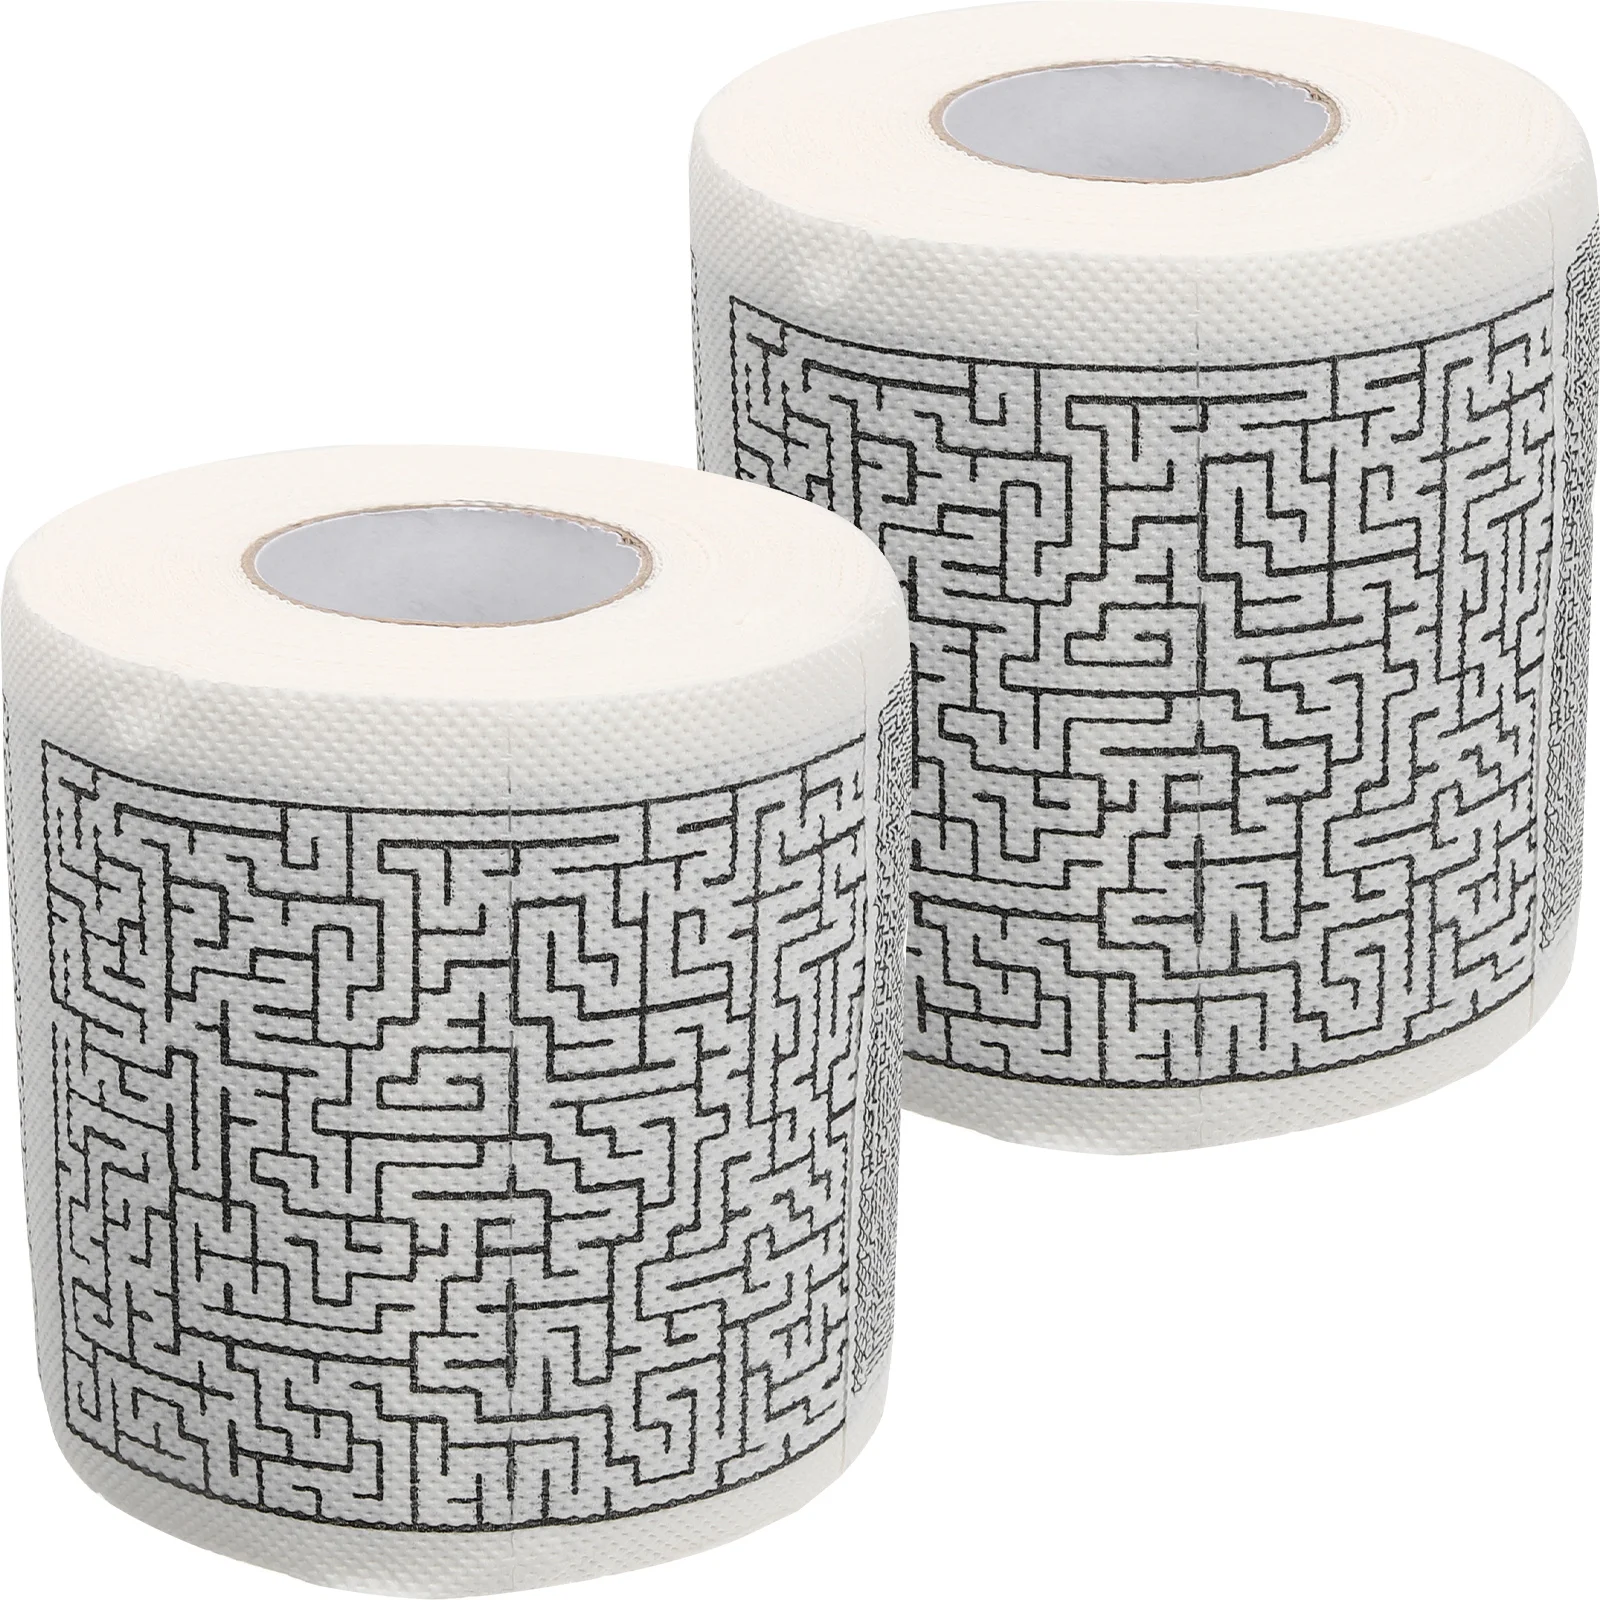 

2 Rolls Decorative Tissue Paper Napkins Toilet Used Papers Wood Pulp Supple Bathroom Supplies Leg